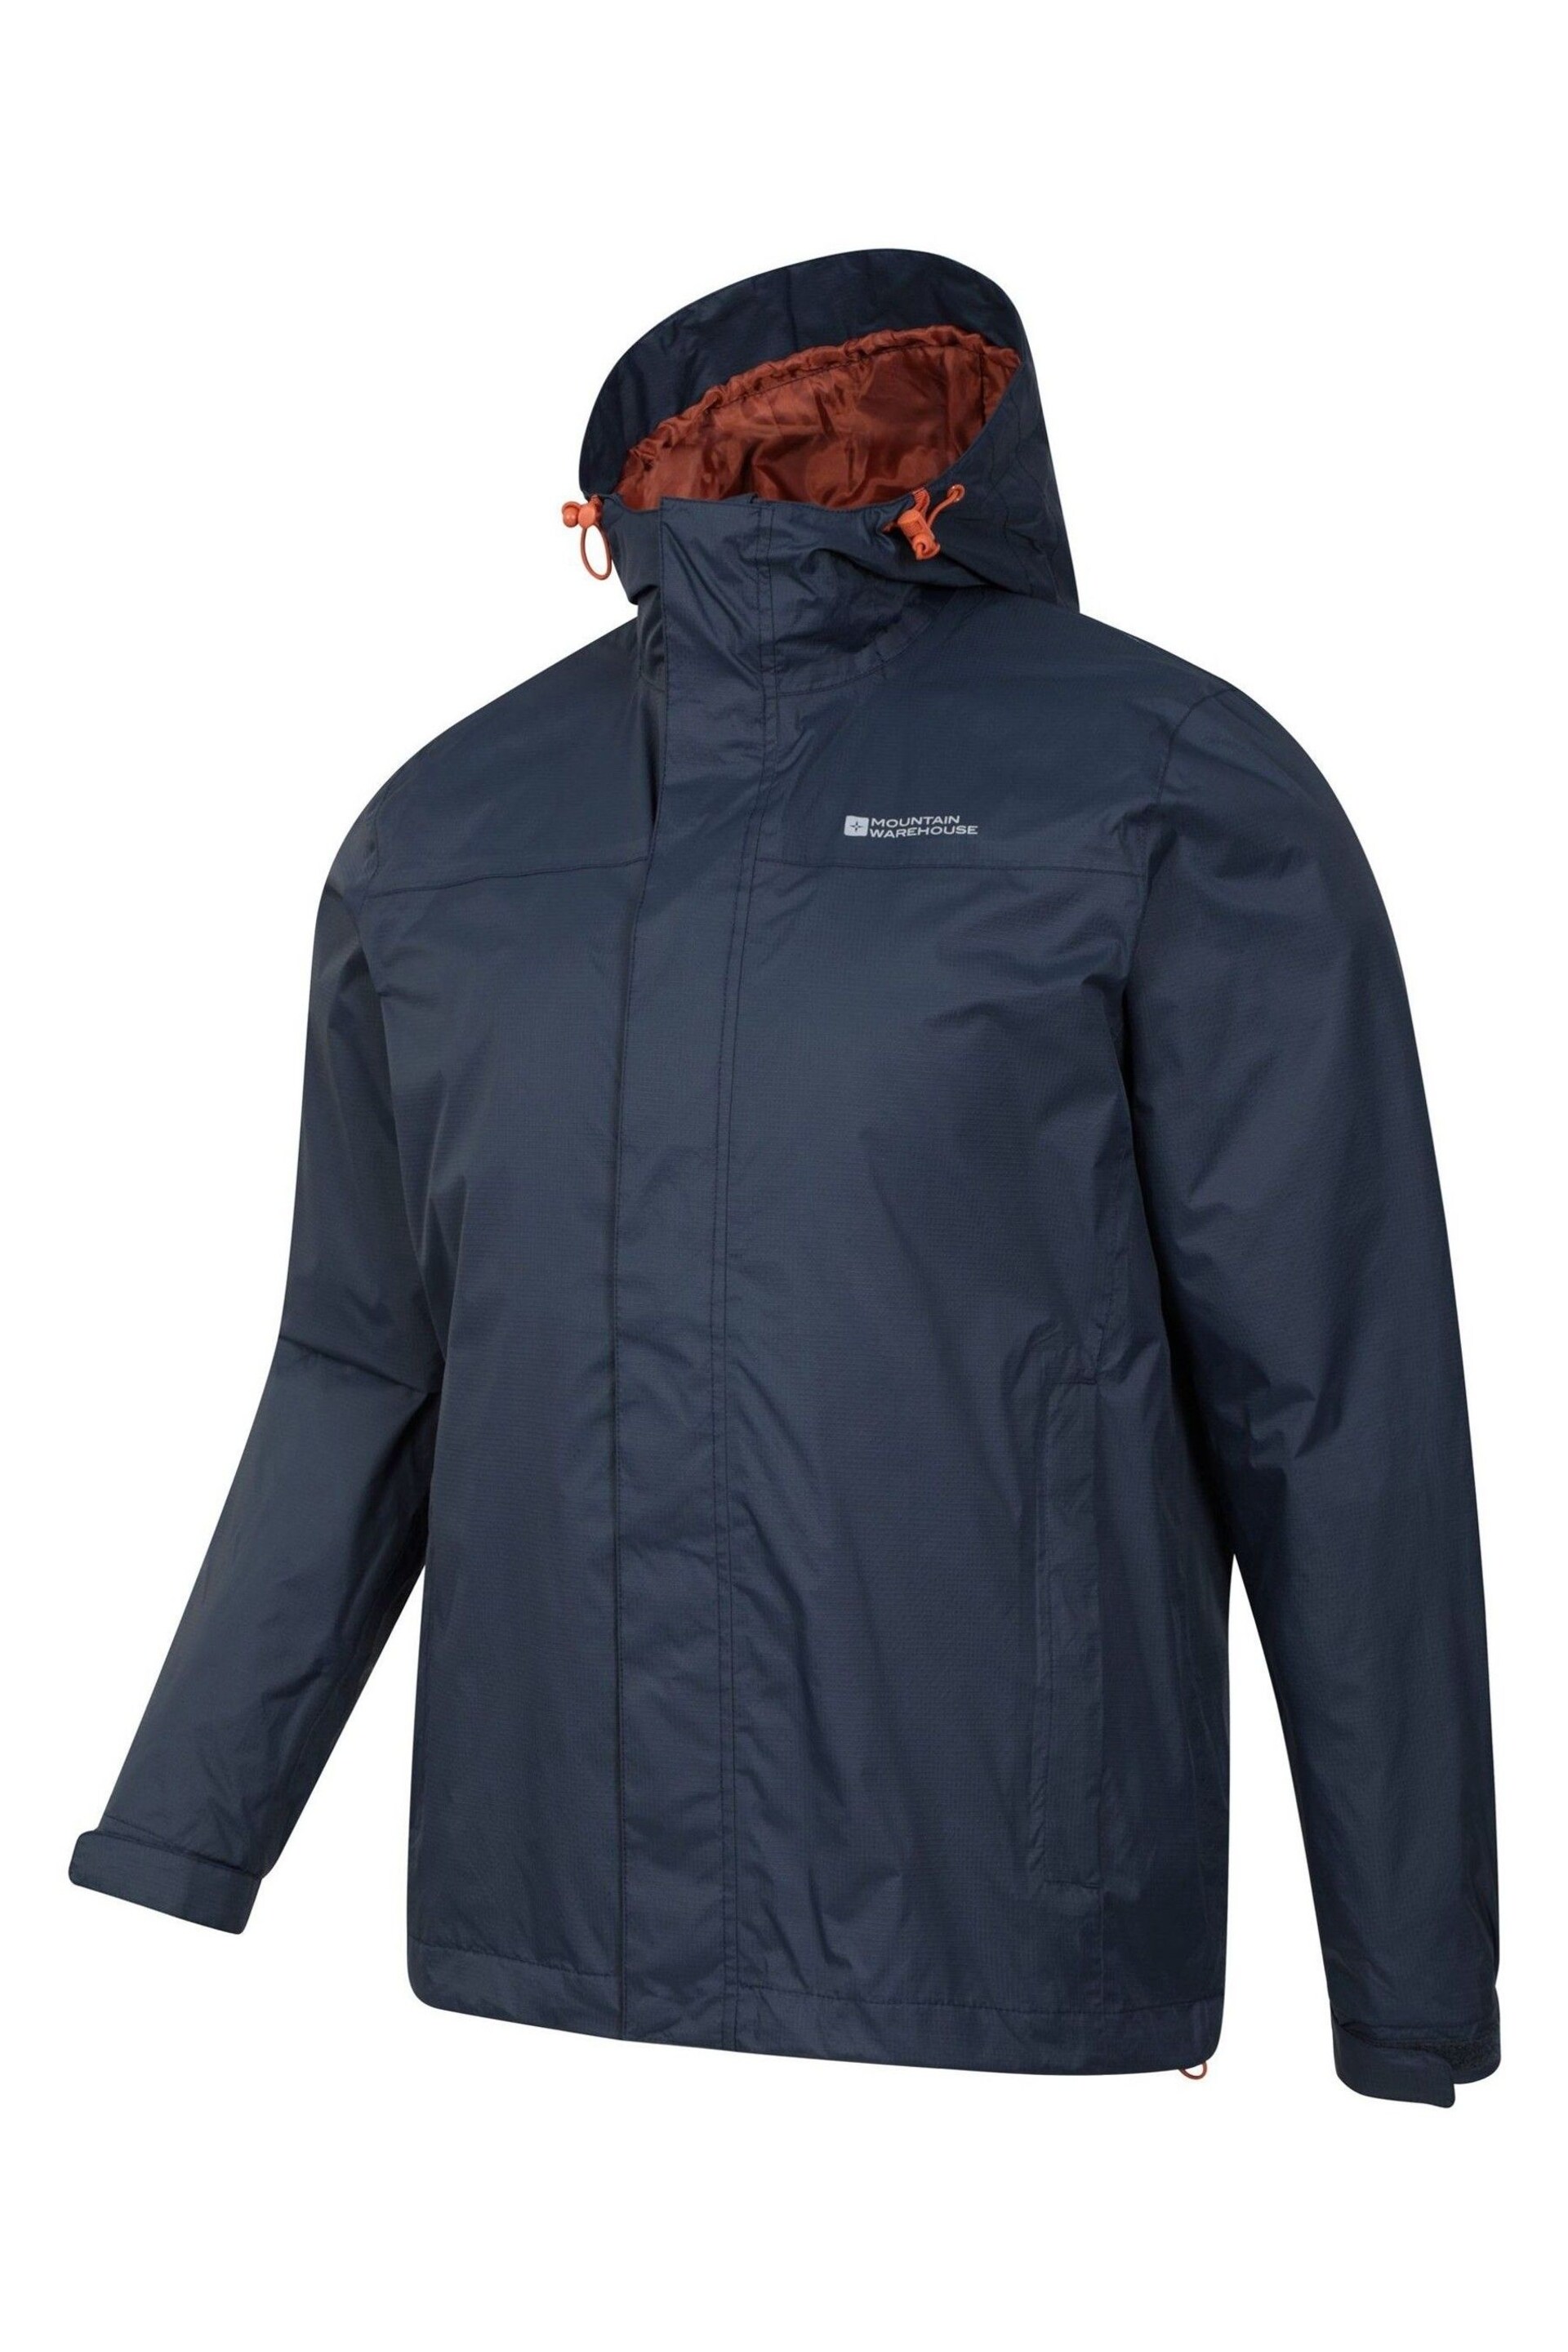 Mountain Warehouse Blue Torrent Mens Waterproof Jacket - Image 5 of 5